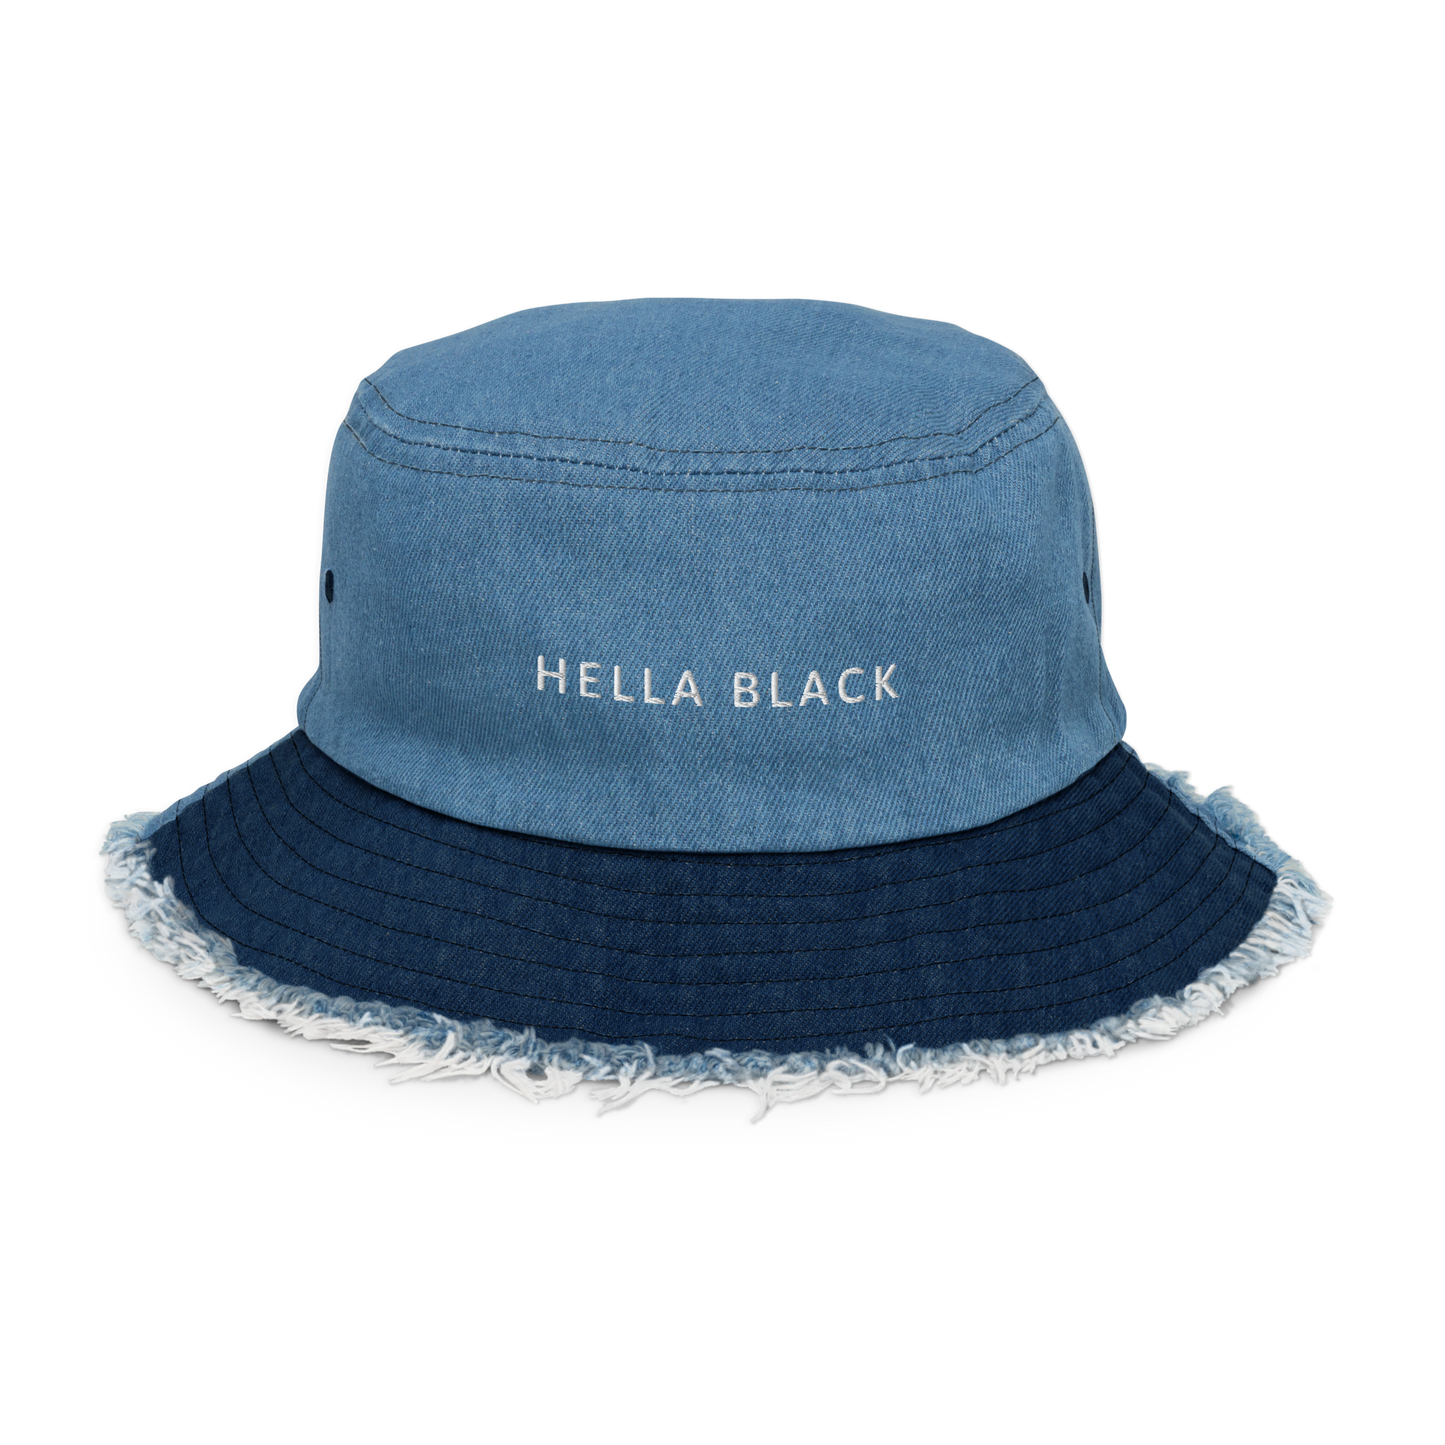 Hella Black Distressed Denim Bucket Hat